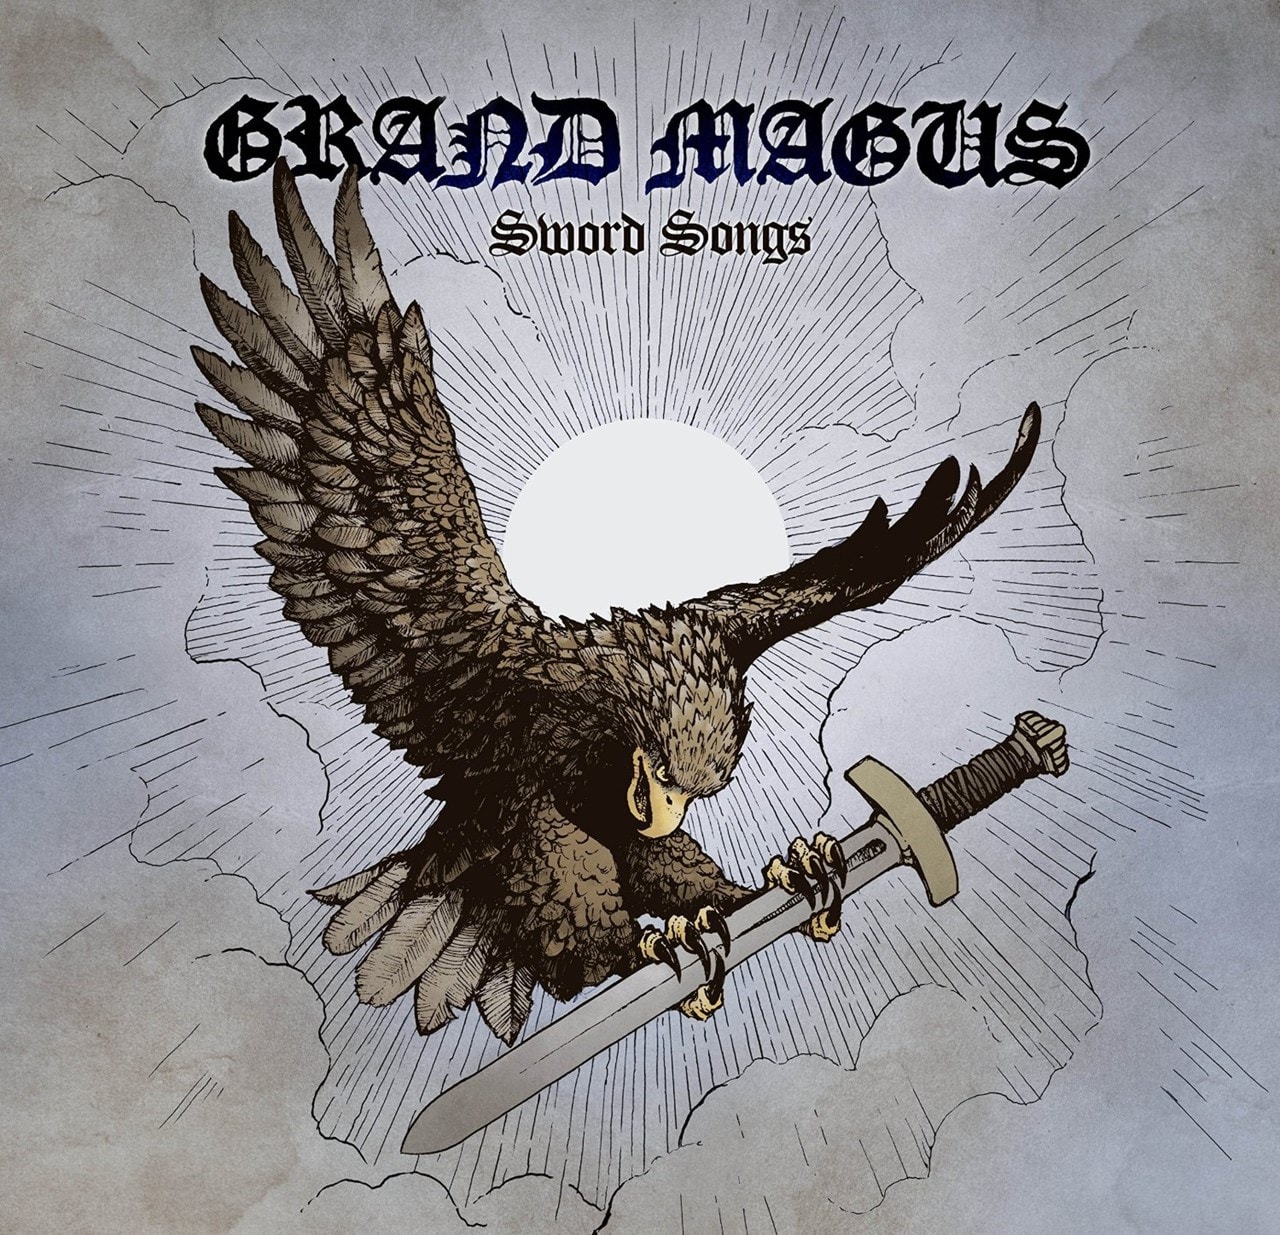 Дай добрый меч песня дай. Grand Magus Sword Songs. Grand Magus CD. Grand Magus 2012 - the Hunt. Grand Magus "Iron will (CD)".